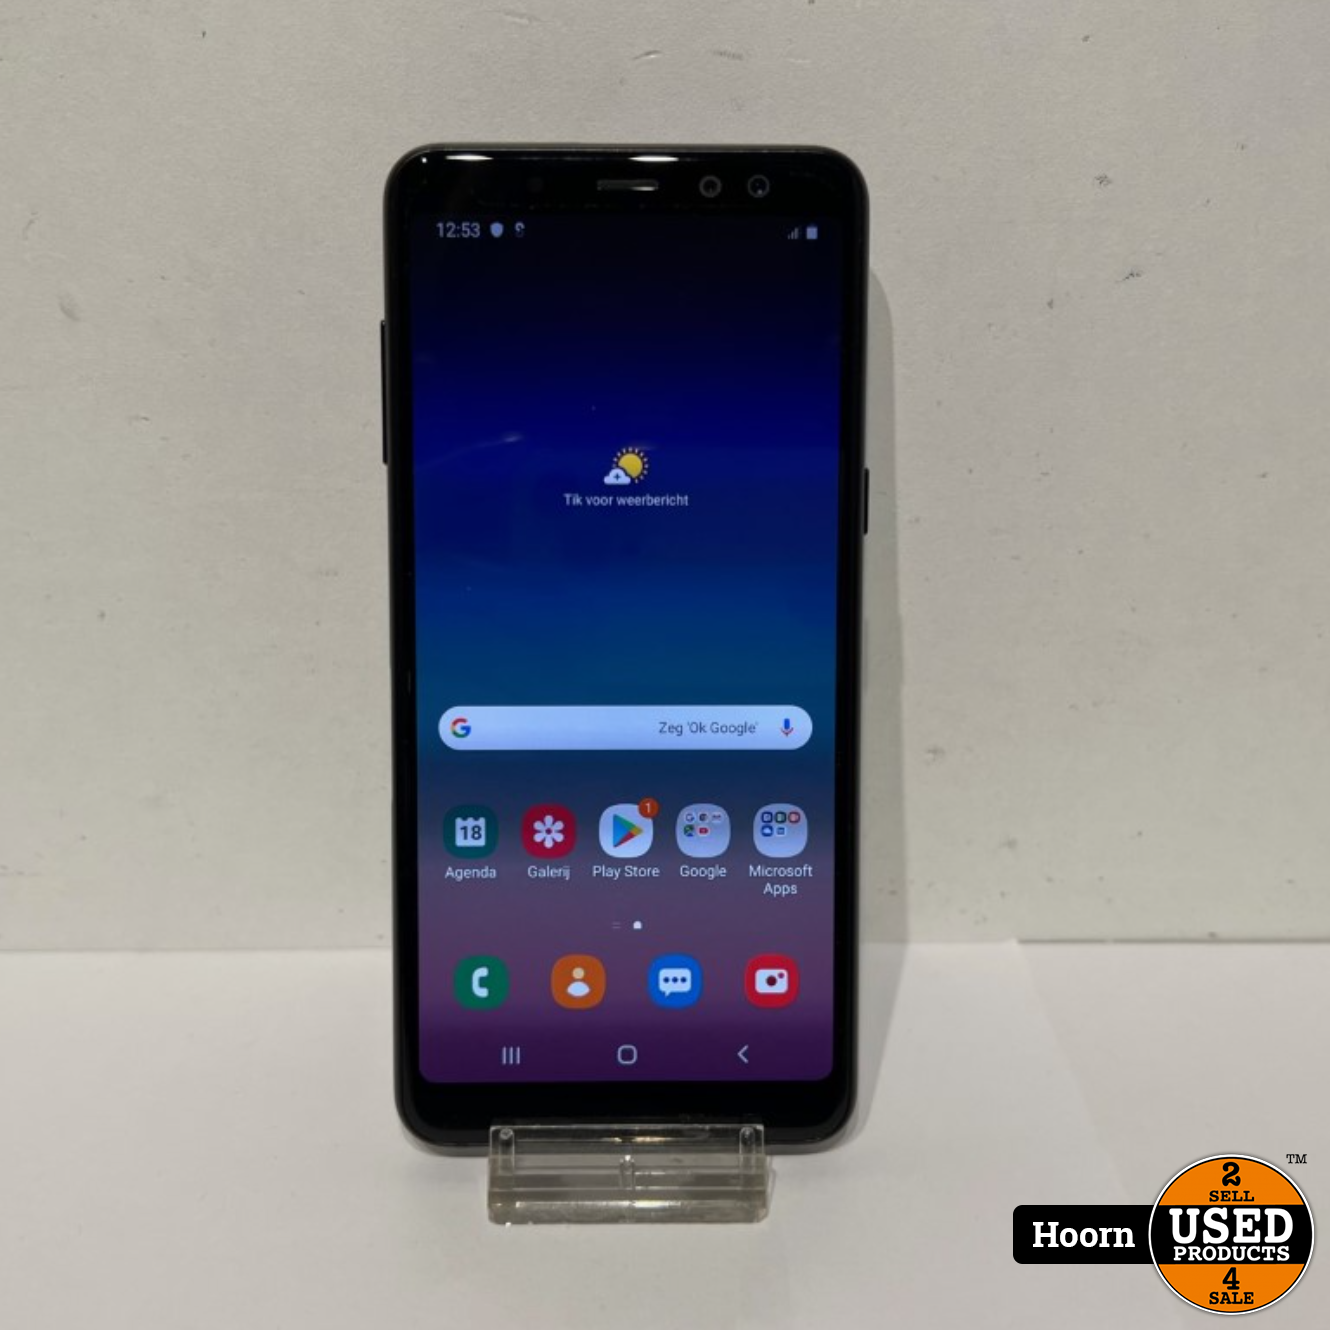 struik Encommium Jachtluipaard samsung Samsung Galaxy A8 2018 32GB Zwart Los Toestel incl. Lader - Used  Products Hoorn